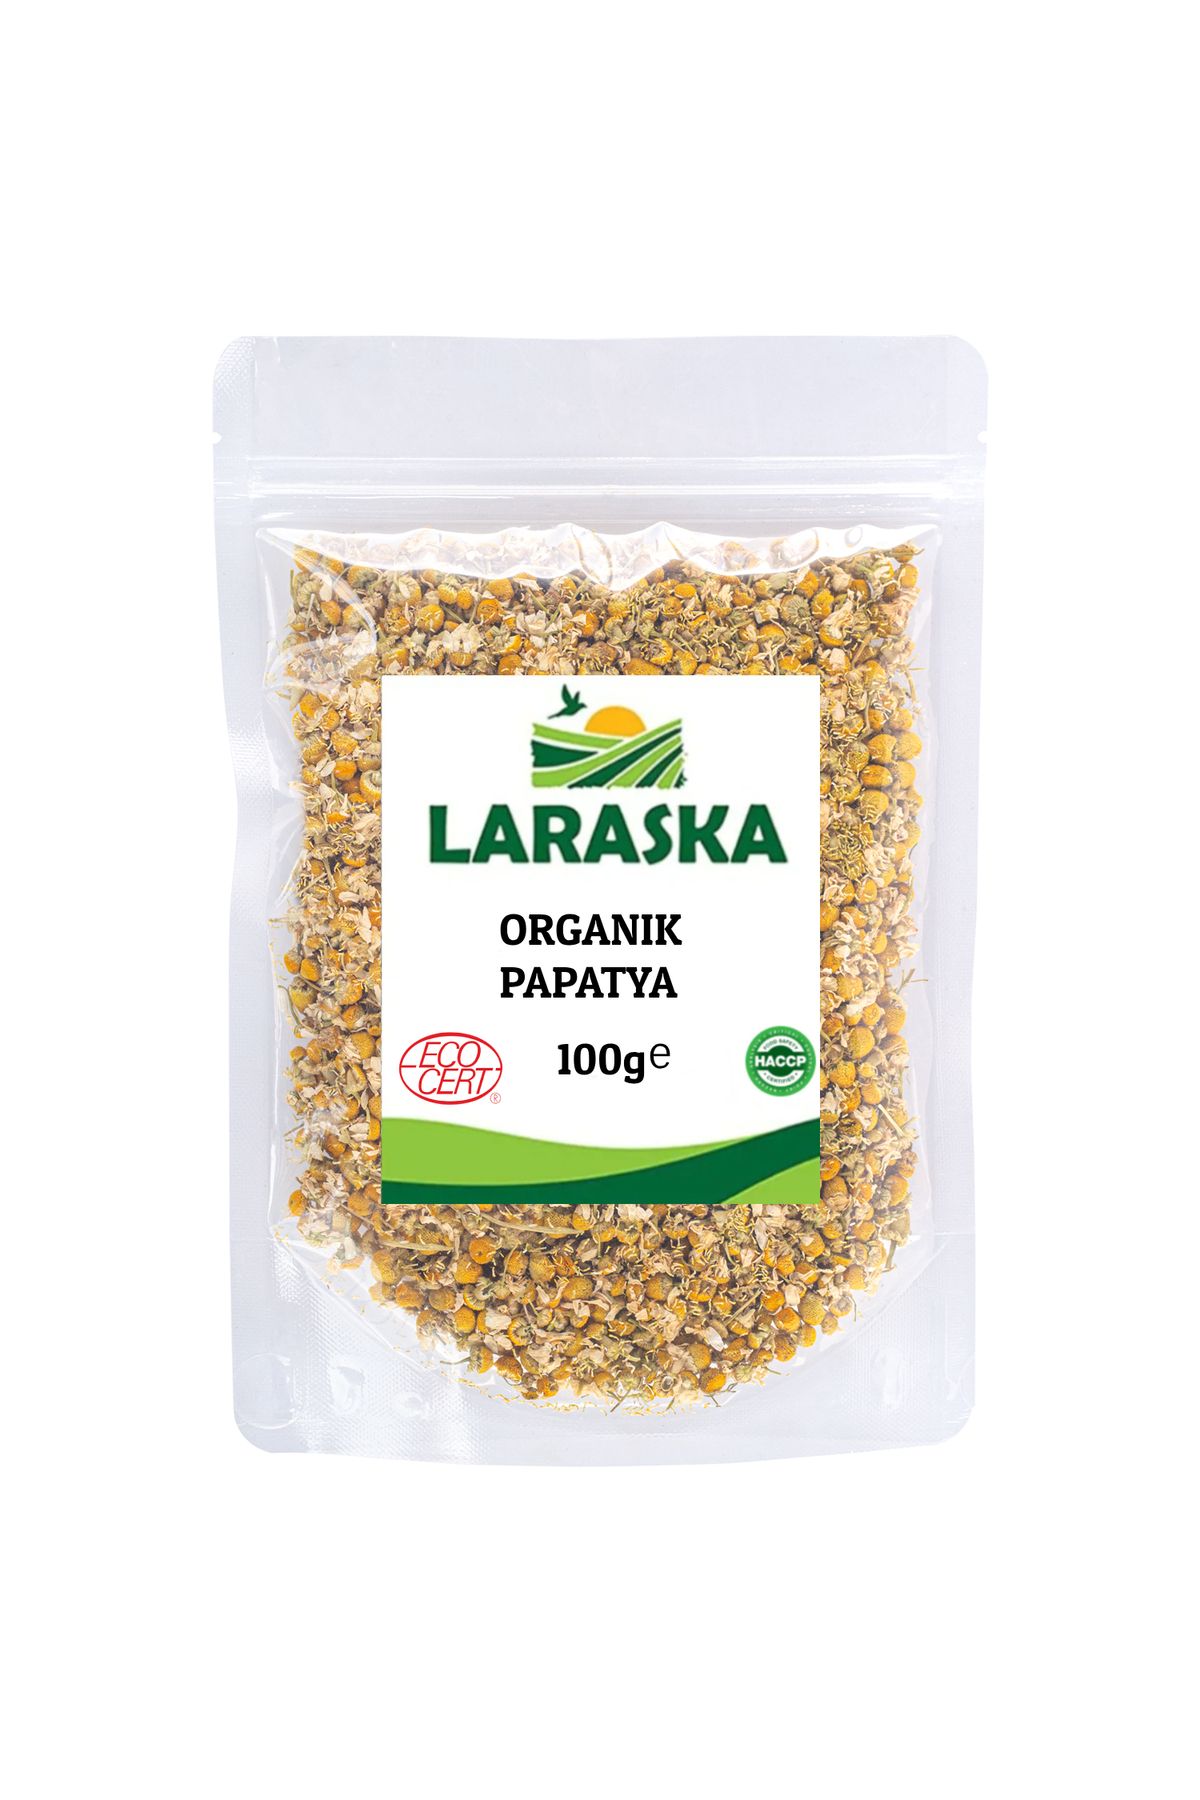 Laraska Organik Papatya Çayı 100g - Chamomile Flowers Loose Tea 100g